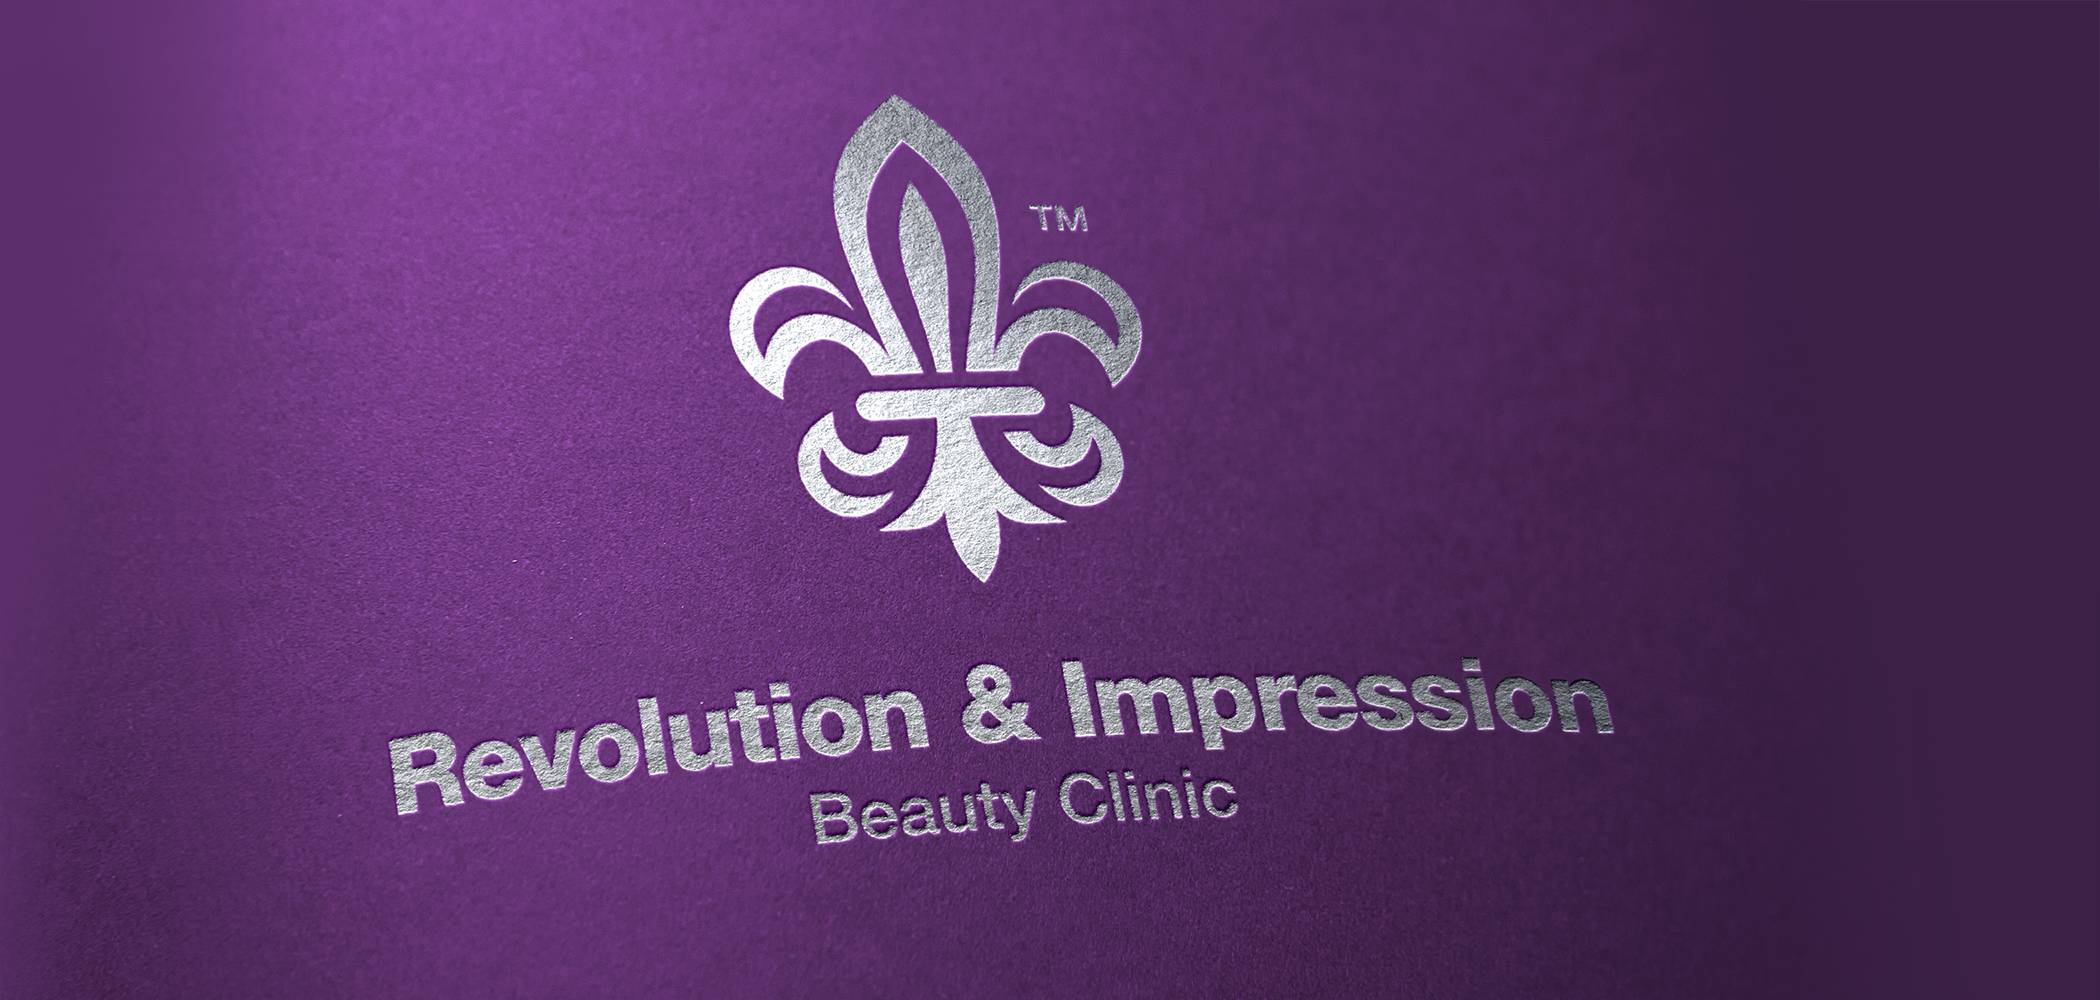 beauty-salon-logo-purple-image